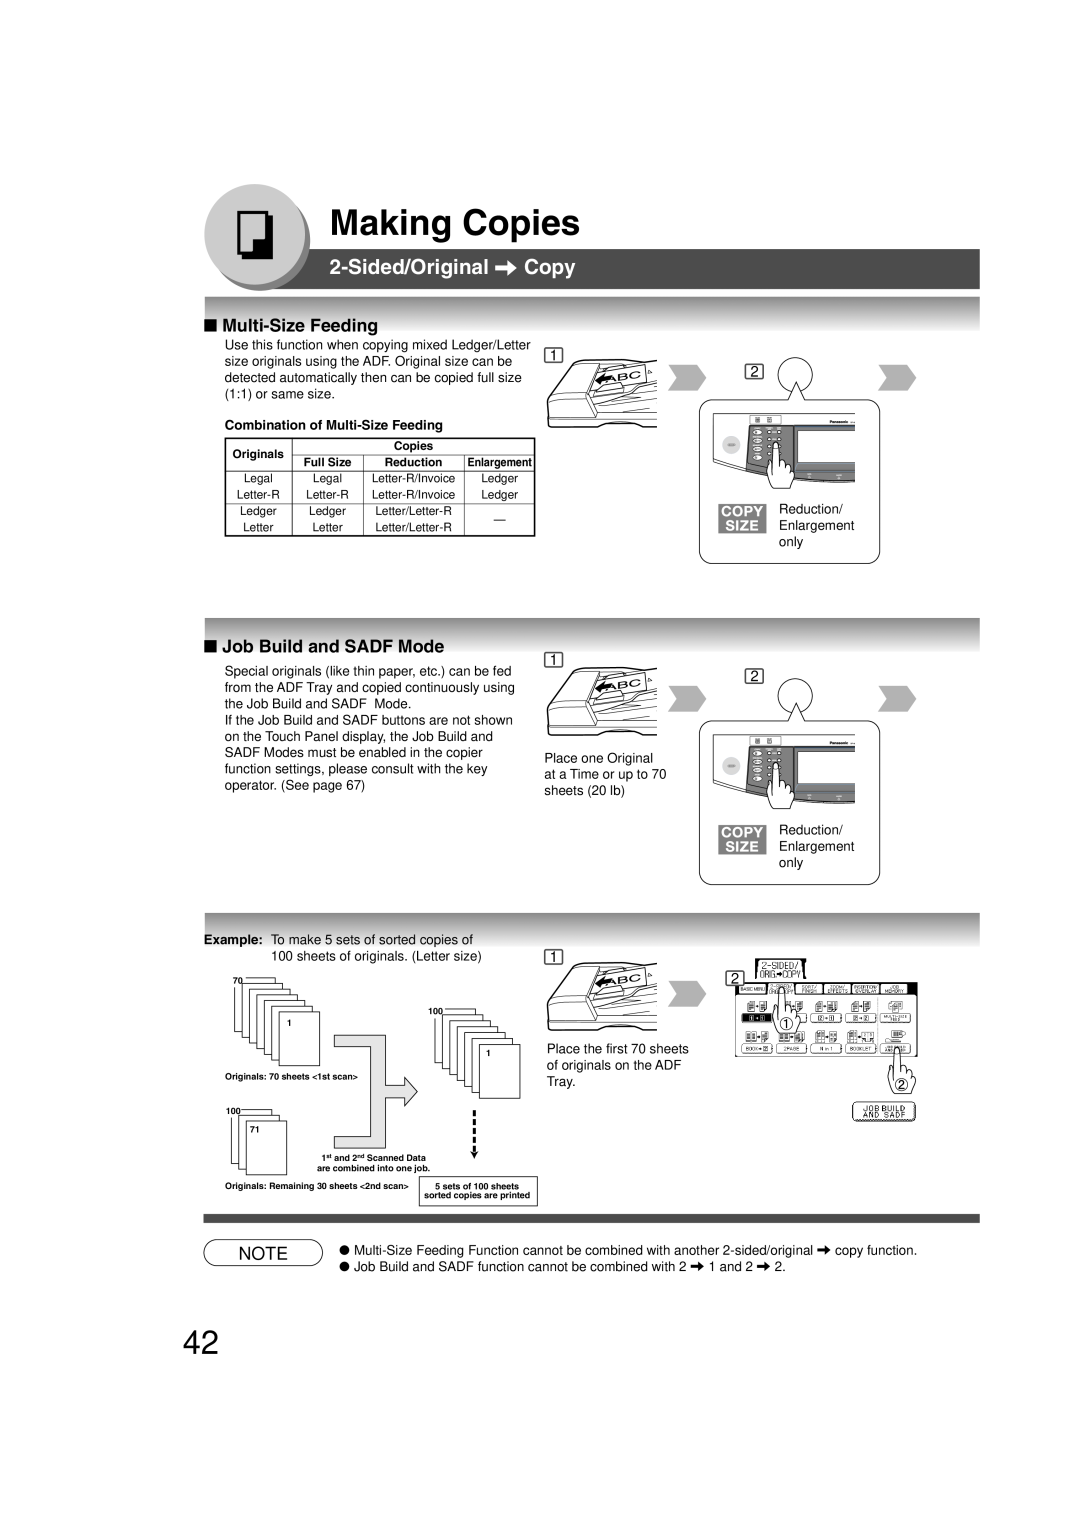 Panasonic 4520, 6020 manual Multi-Size Feeding, Job Build and SADF Mode, Making Copies, Sided/Original Copy 